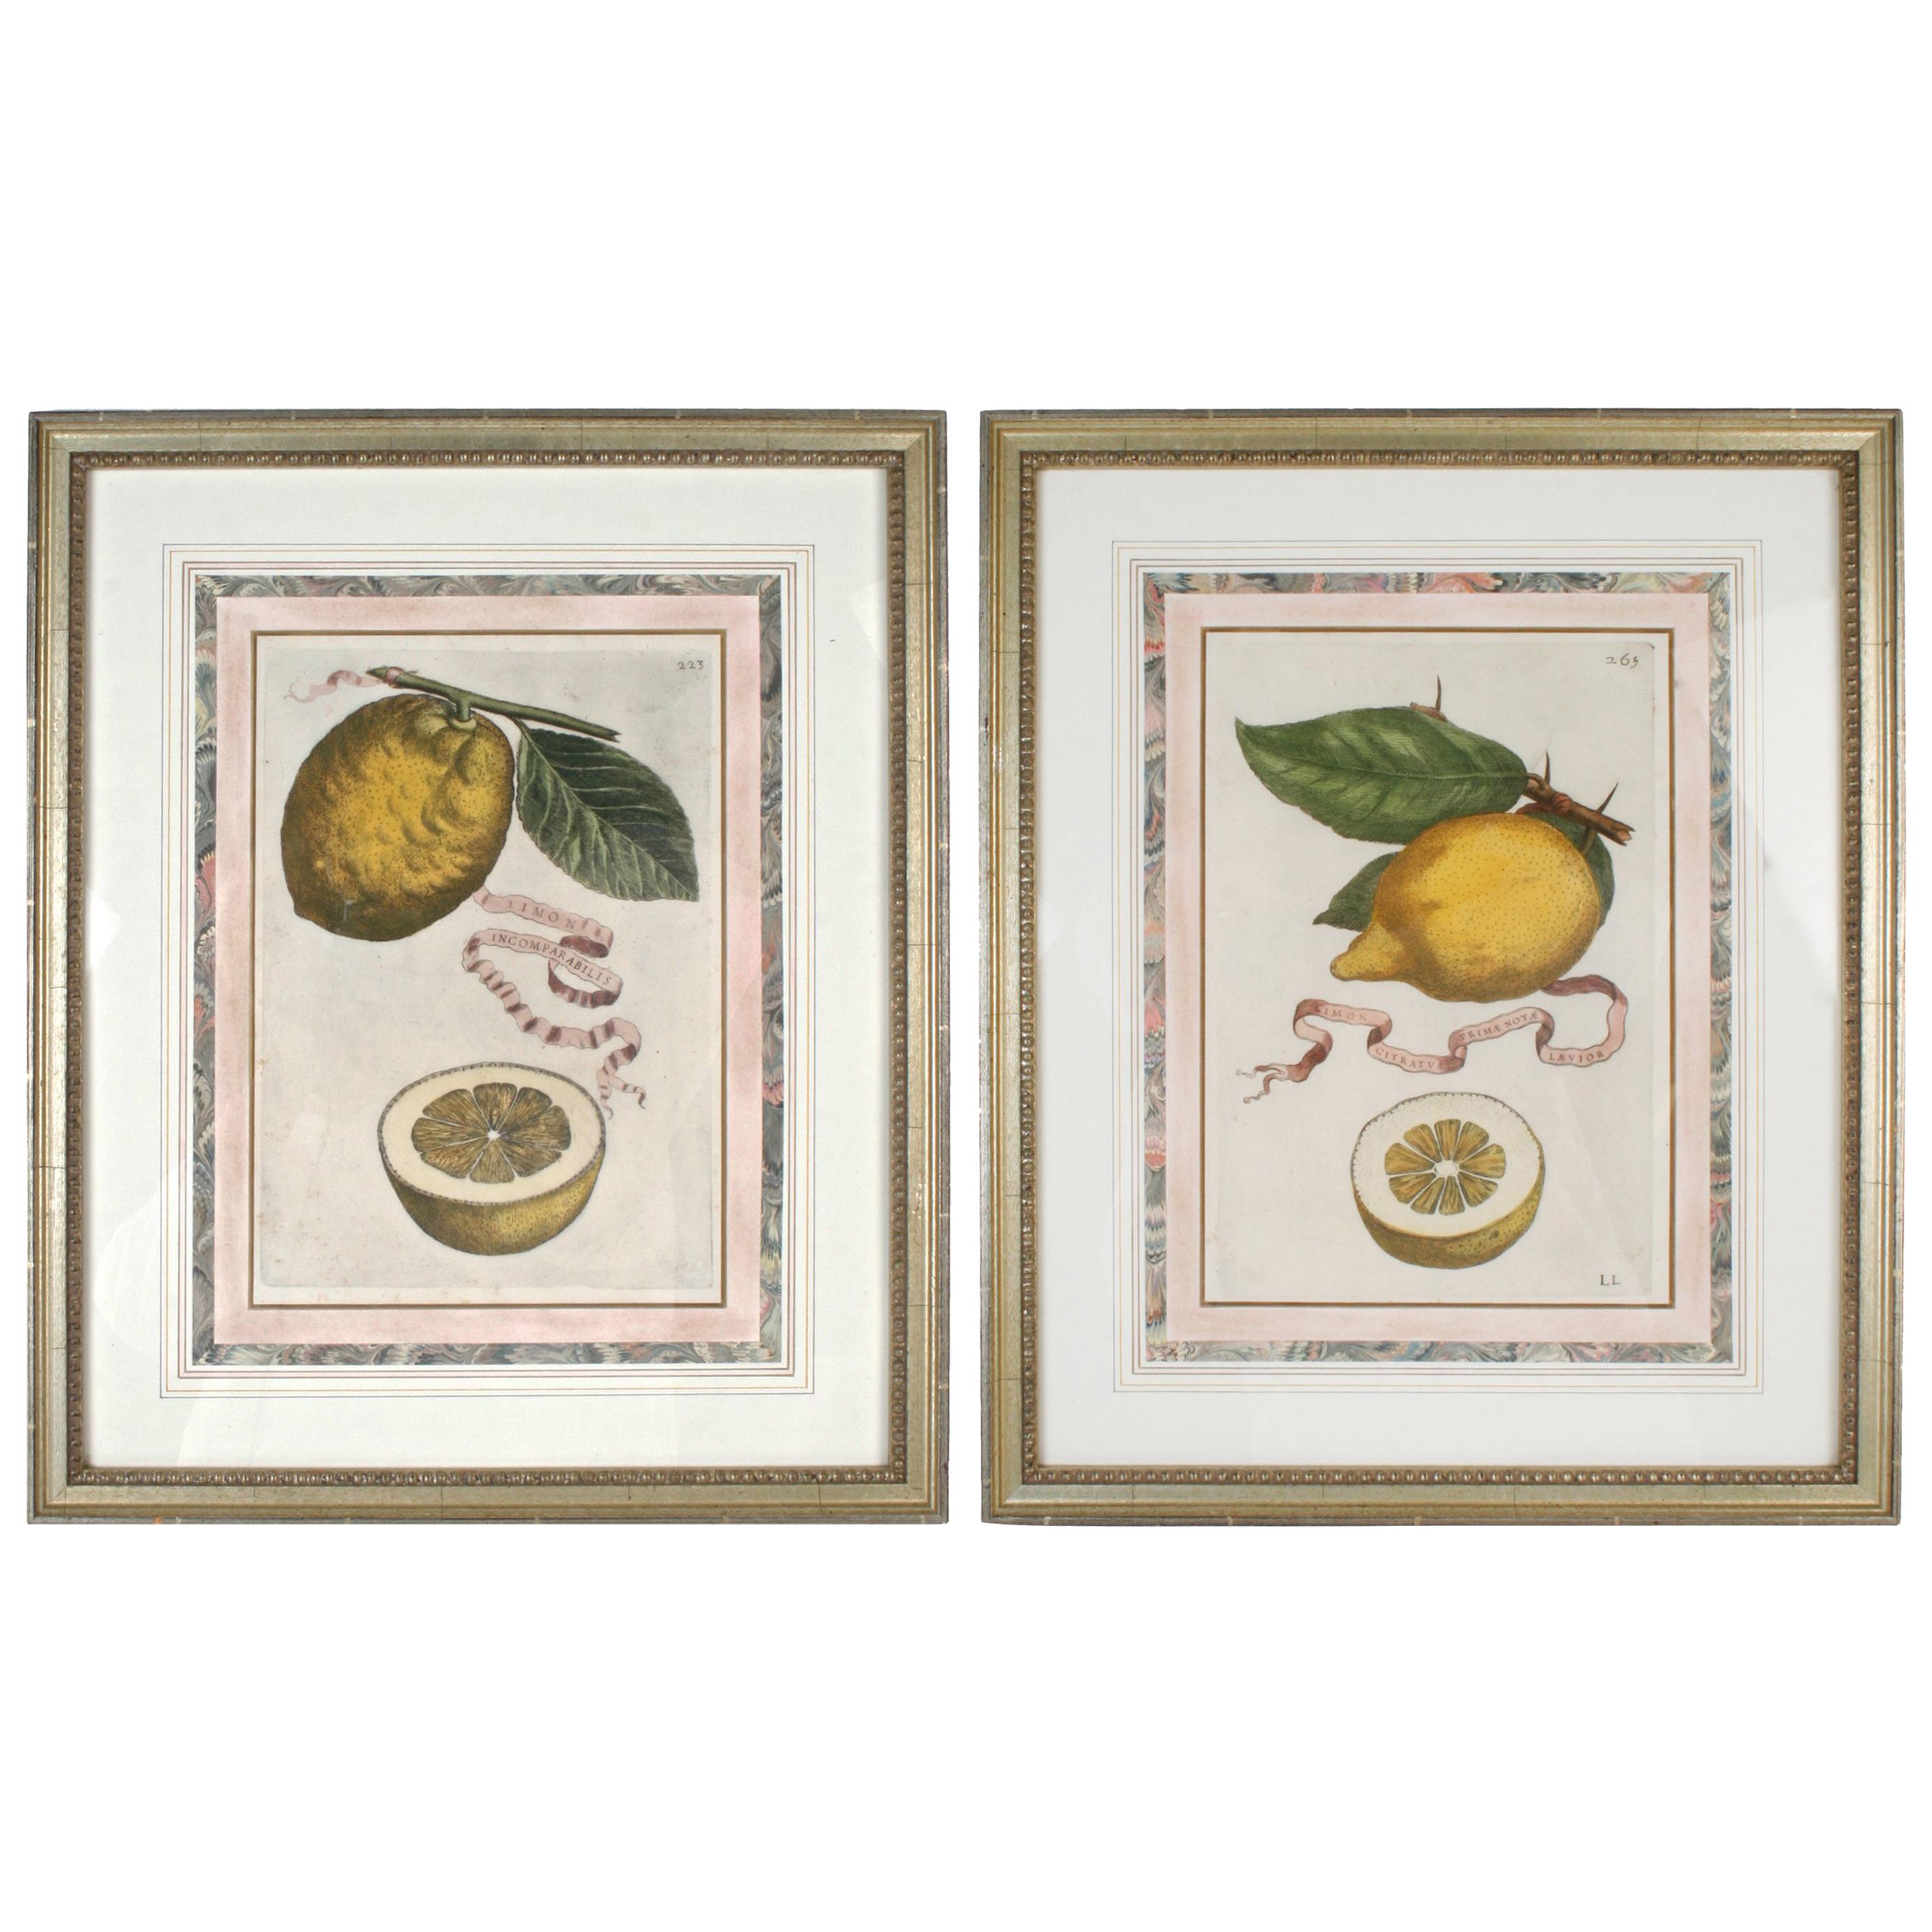 Lemon Botanical Engravings Attributed to Fiovanni Battista Ferrari, c1646